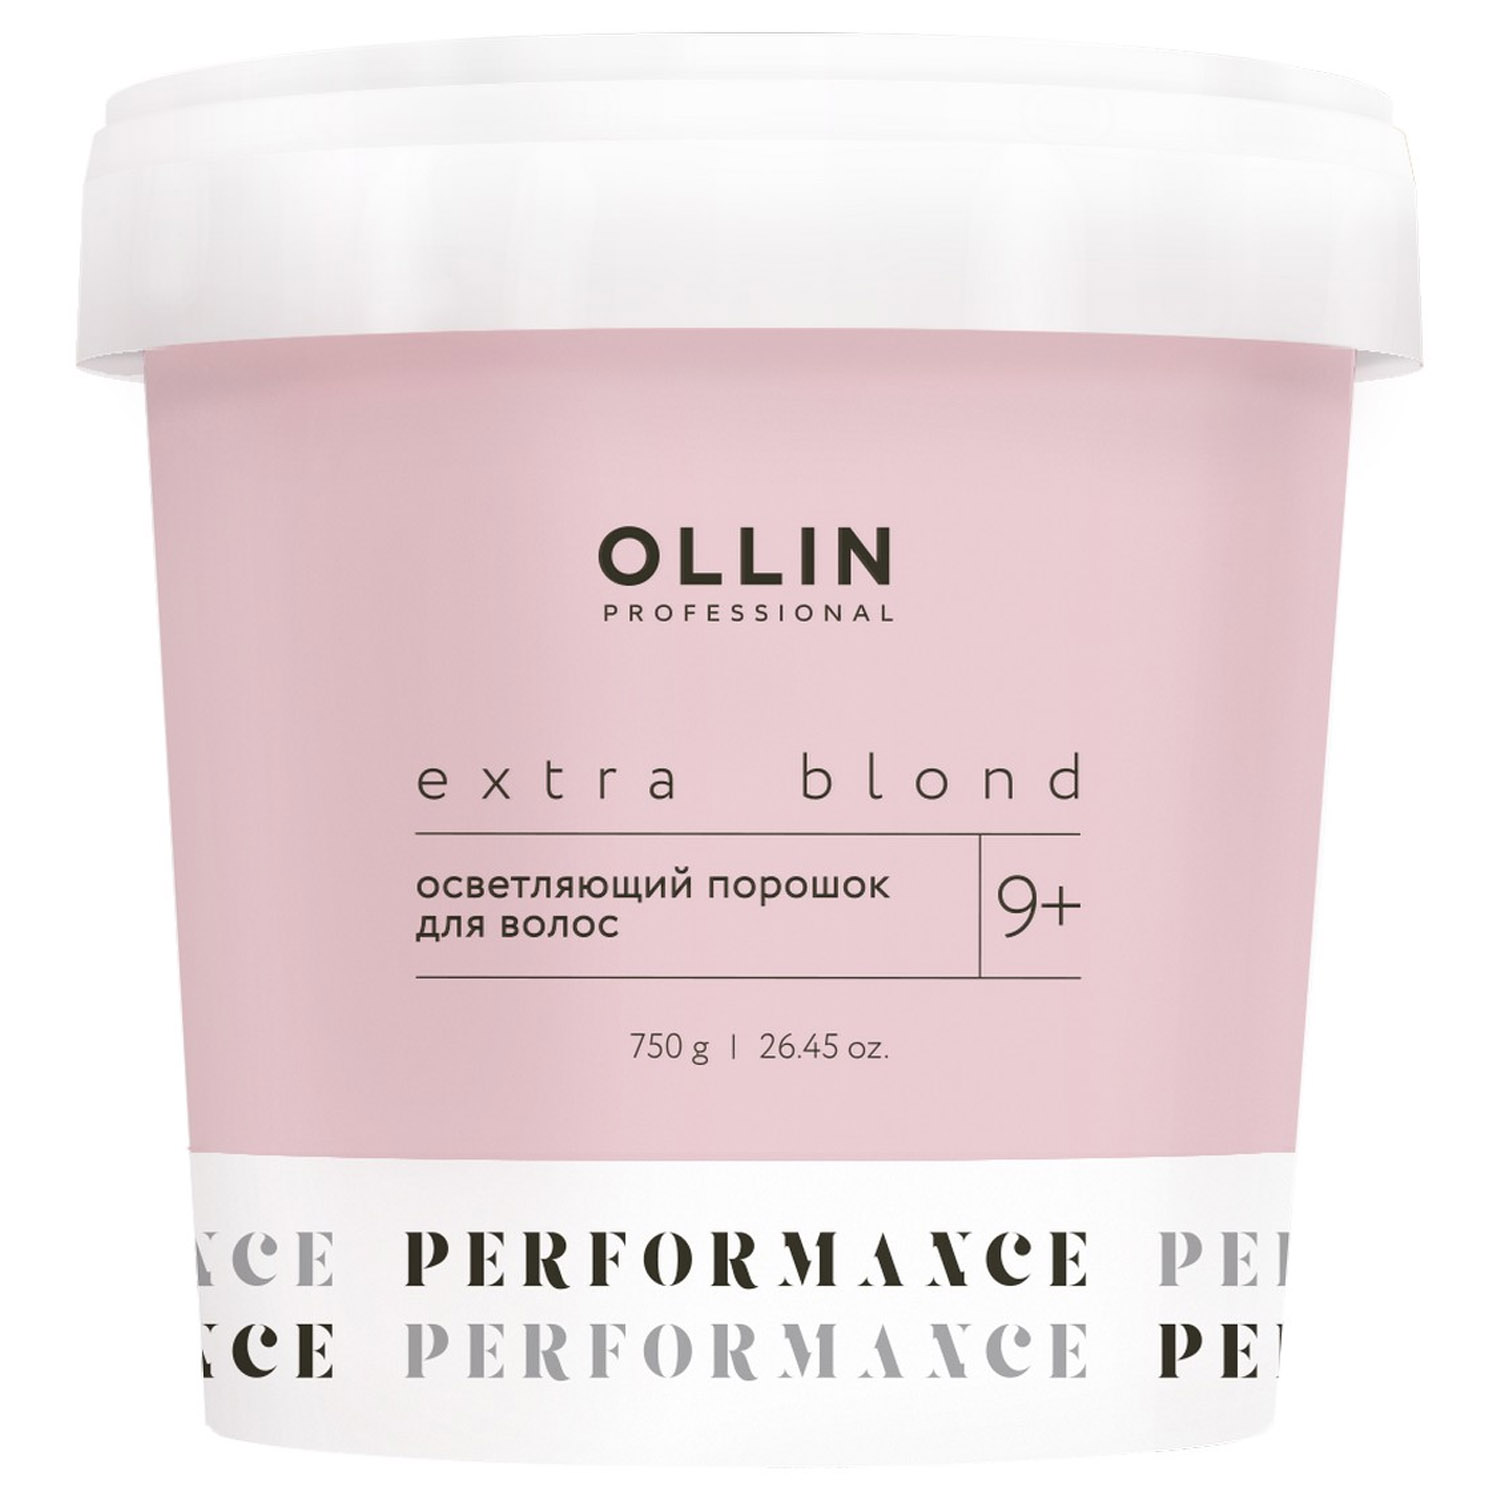 Ollin Professional Осветляющий порошок для волос Extra Blond 9+, 750 г (Ollin Professional, Performance) порошок осветляющий ollin professional blond performance white classic 30 г